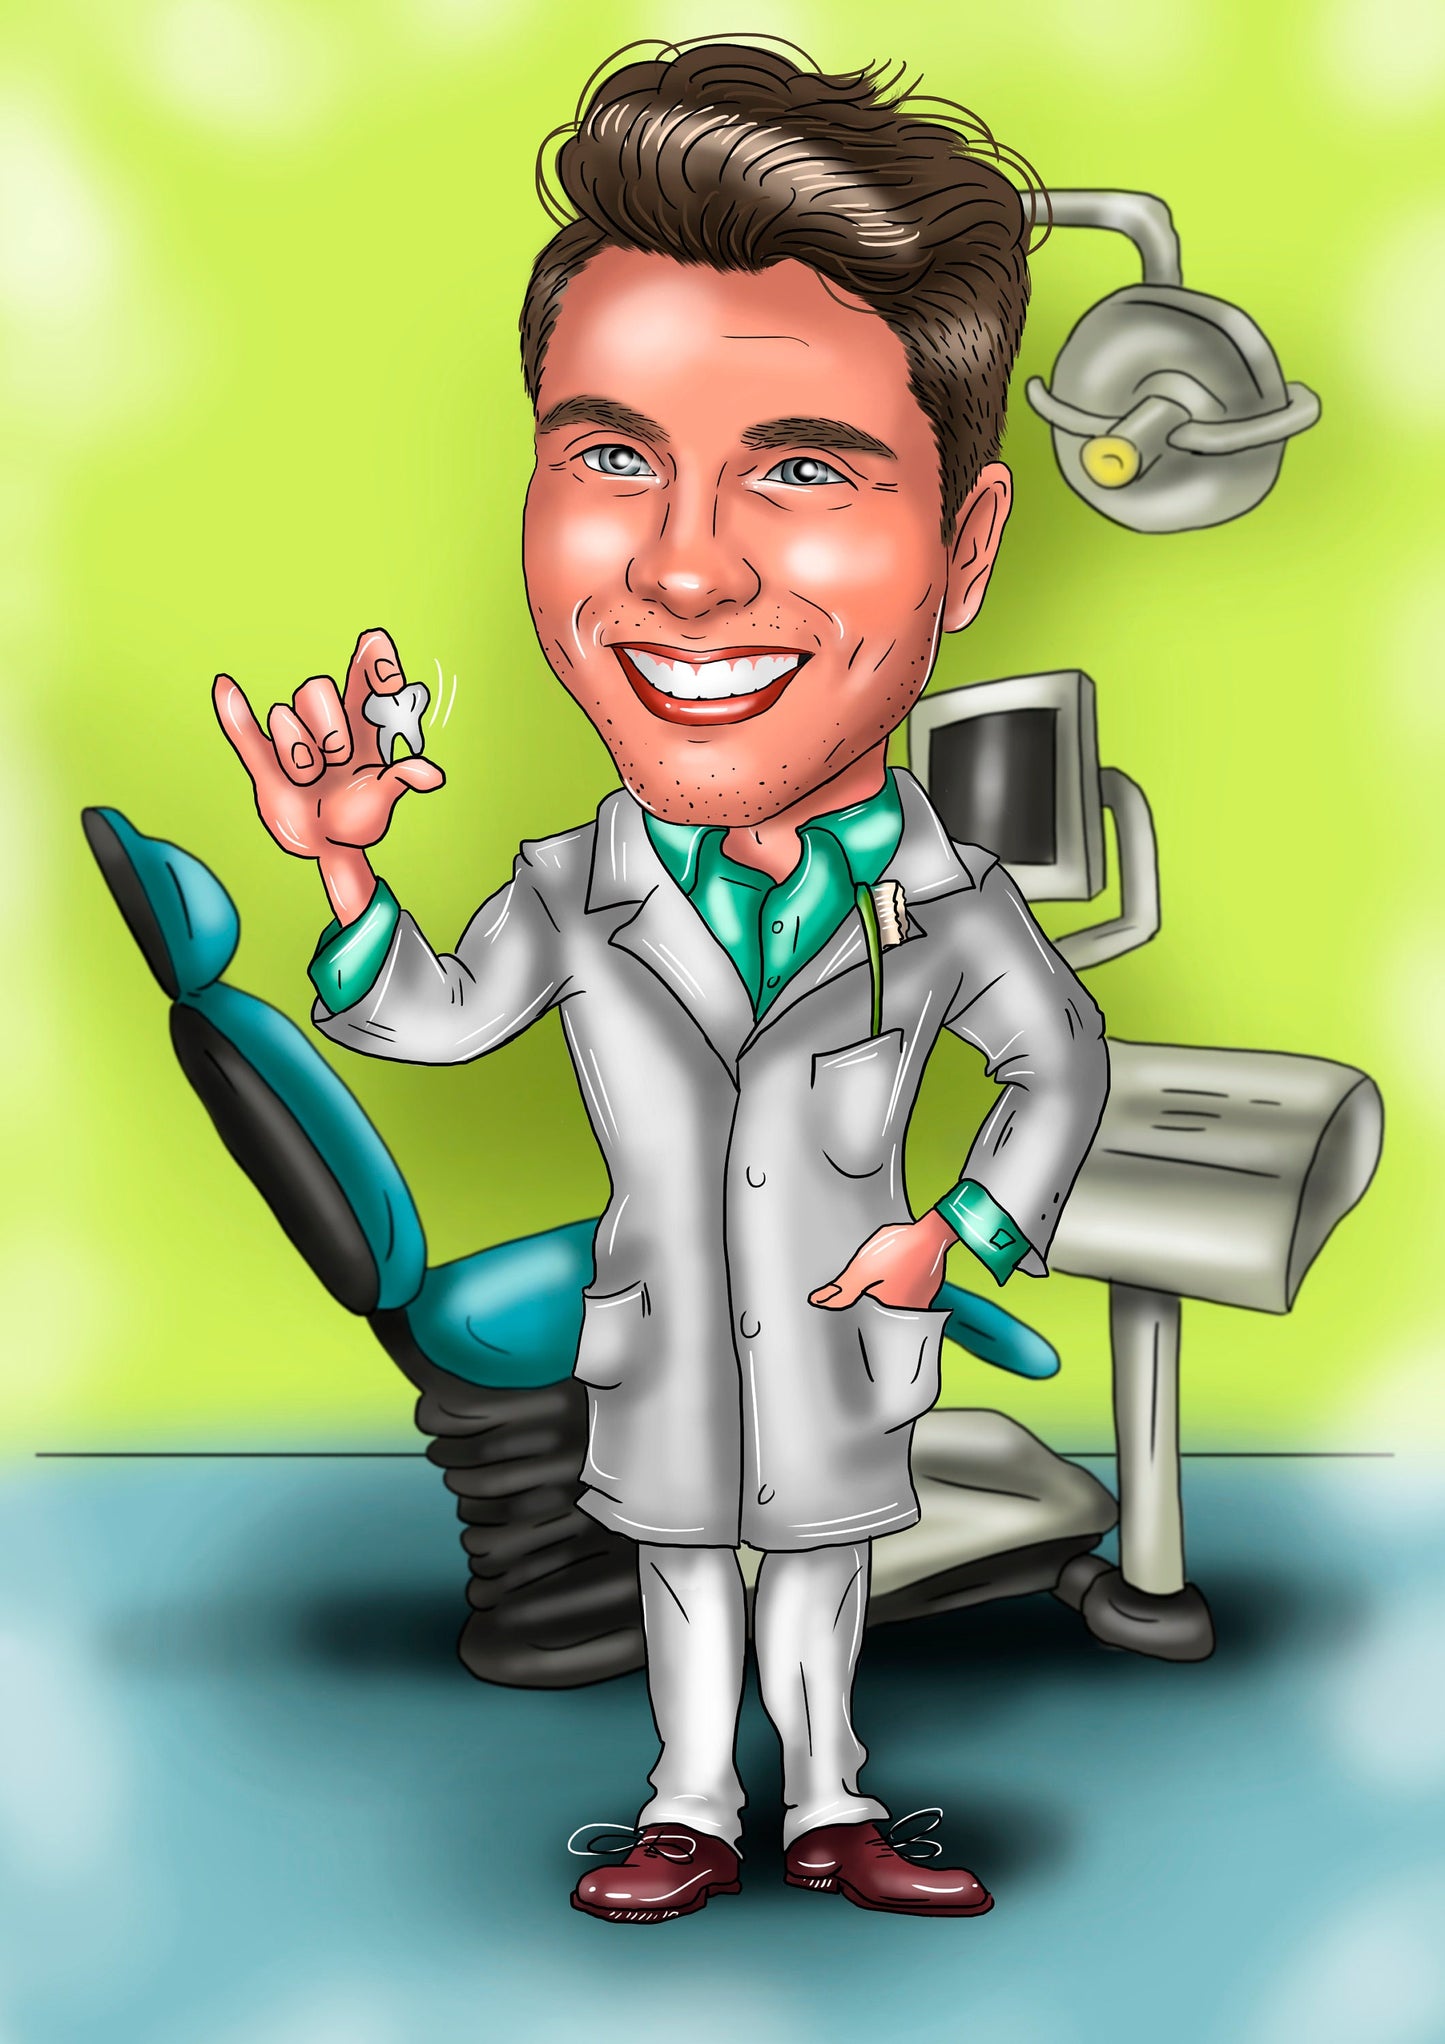 Dentist Gift - Custom Caricature Portrait From Your Photo/Dentist Gift Ideas/Dentist Caricature